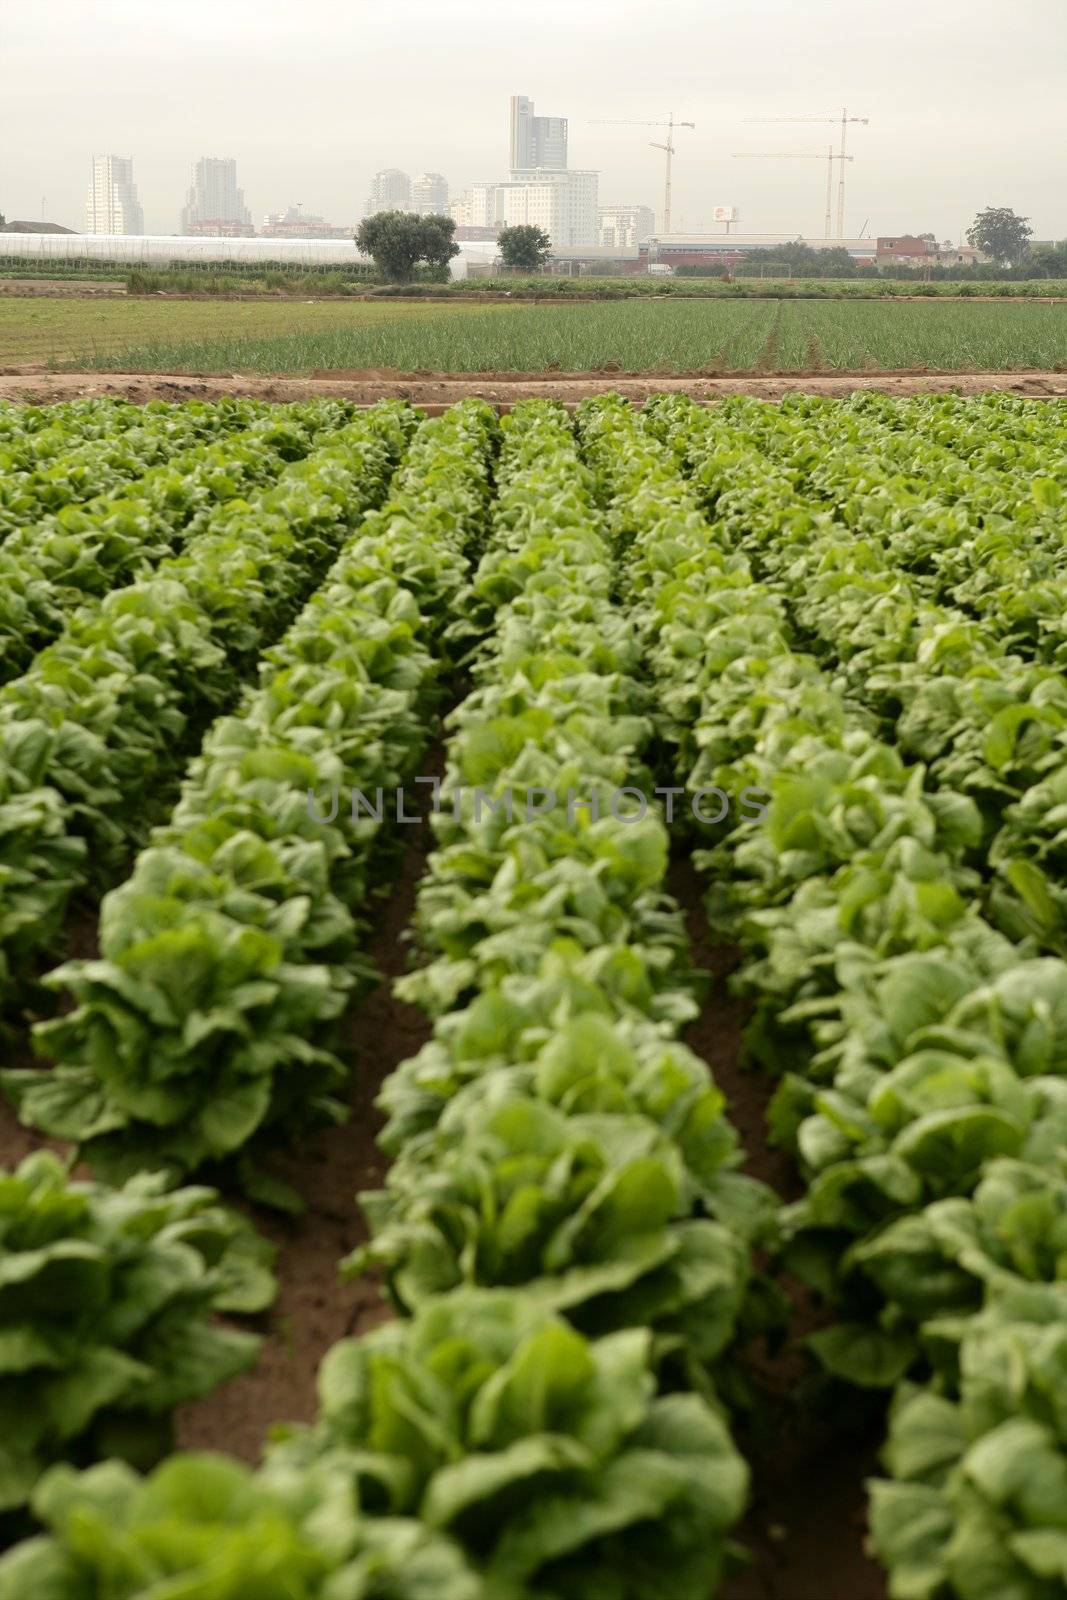 Cabbage fields in Spain by lunamarina